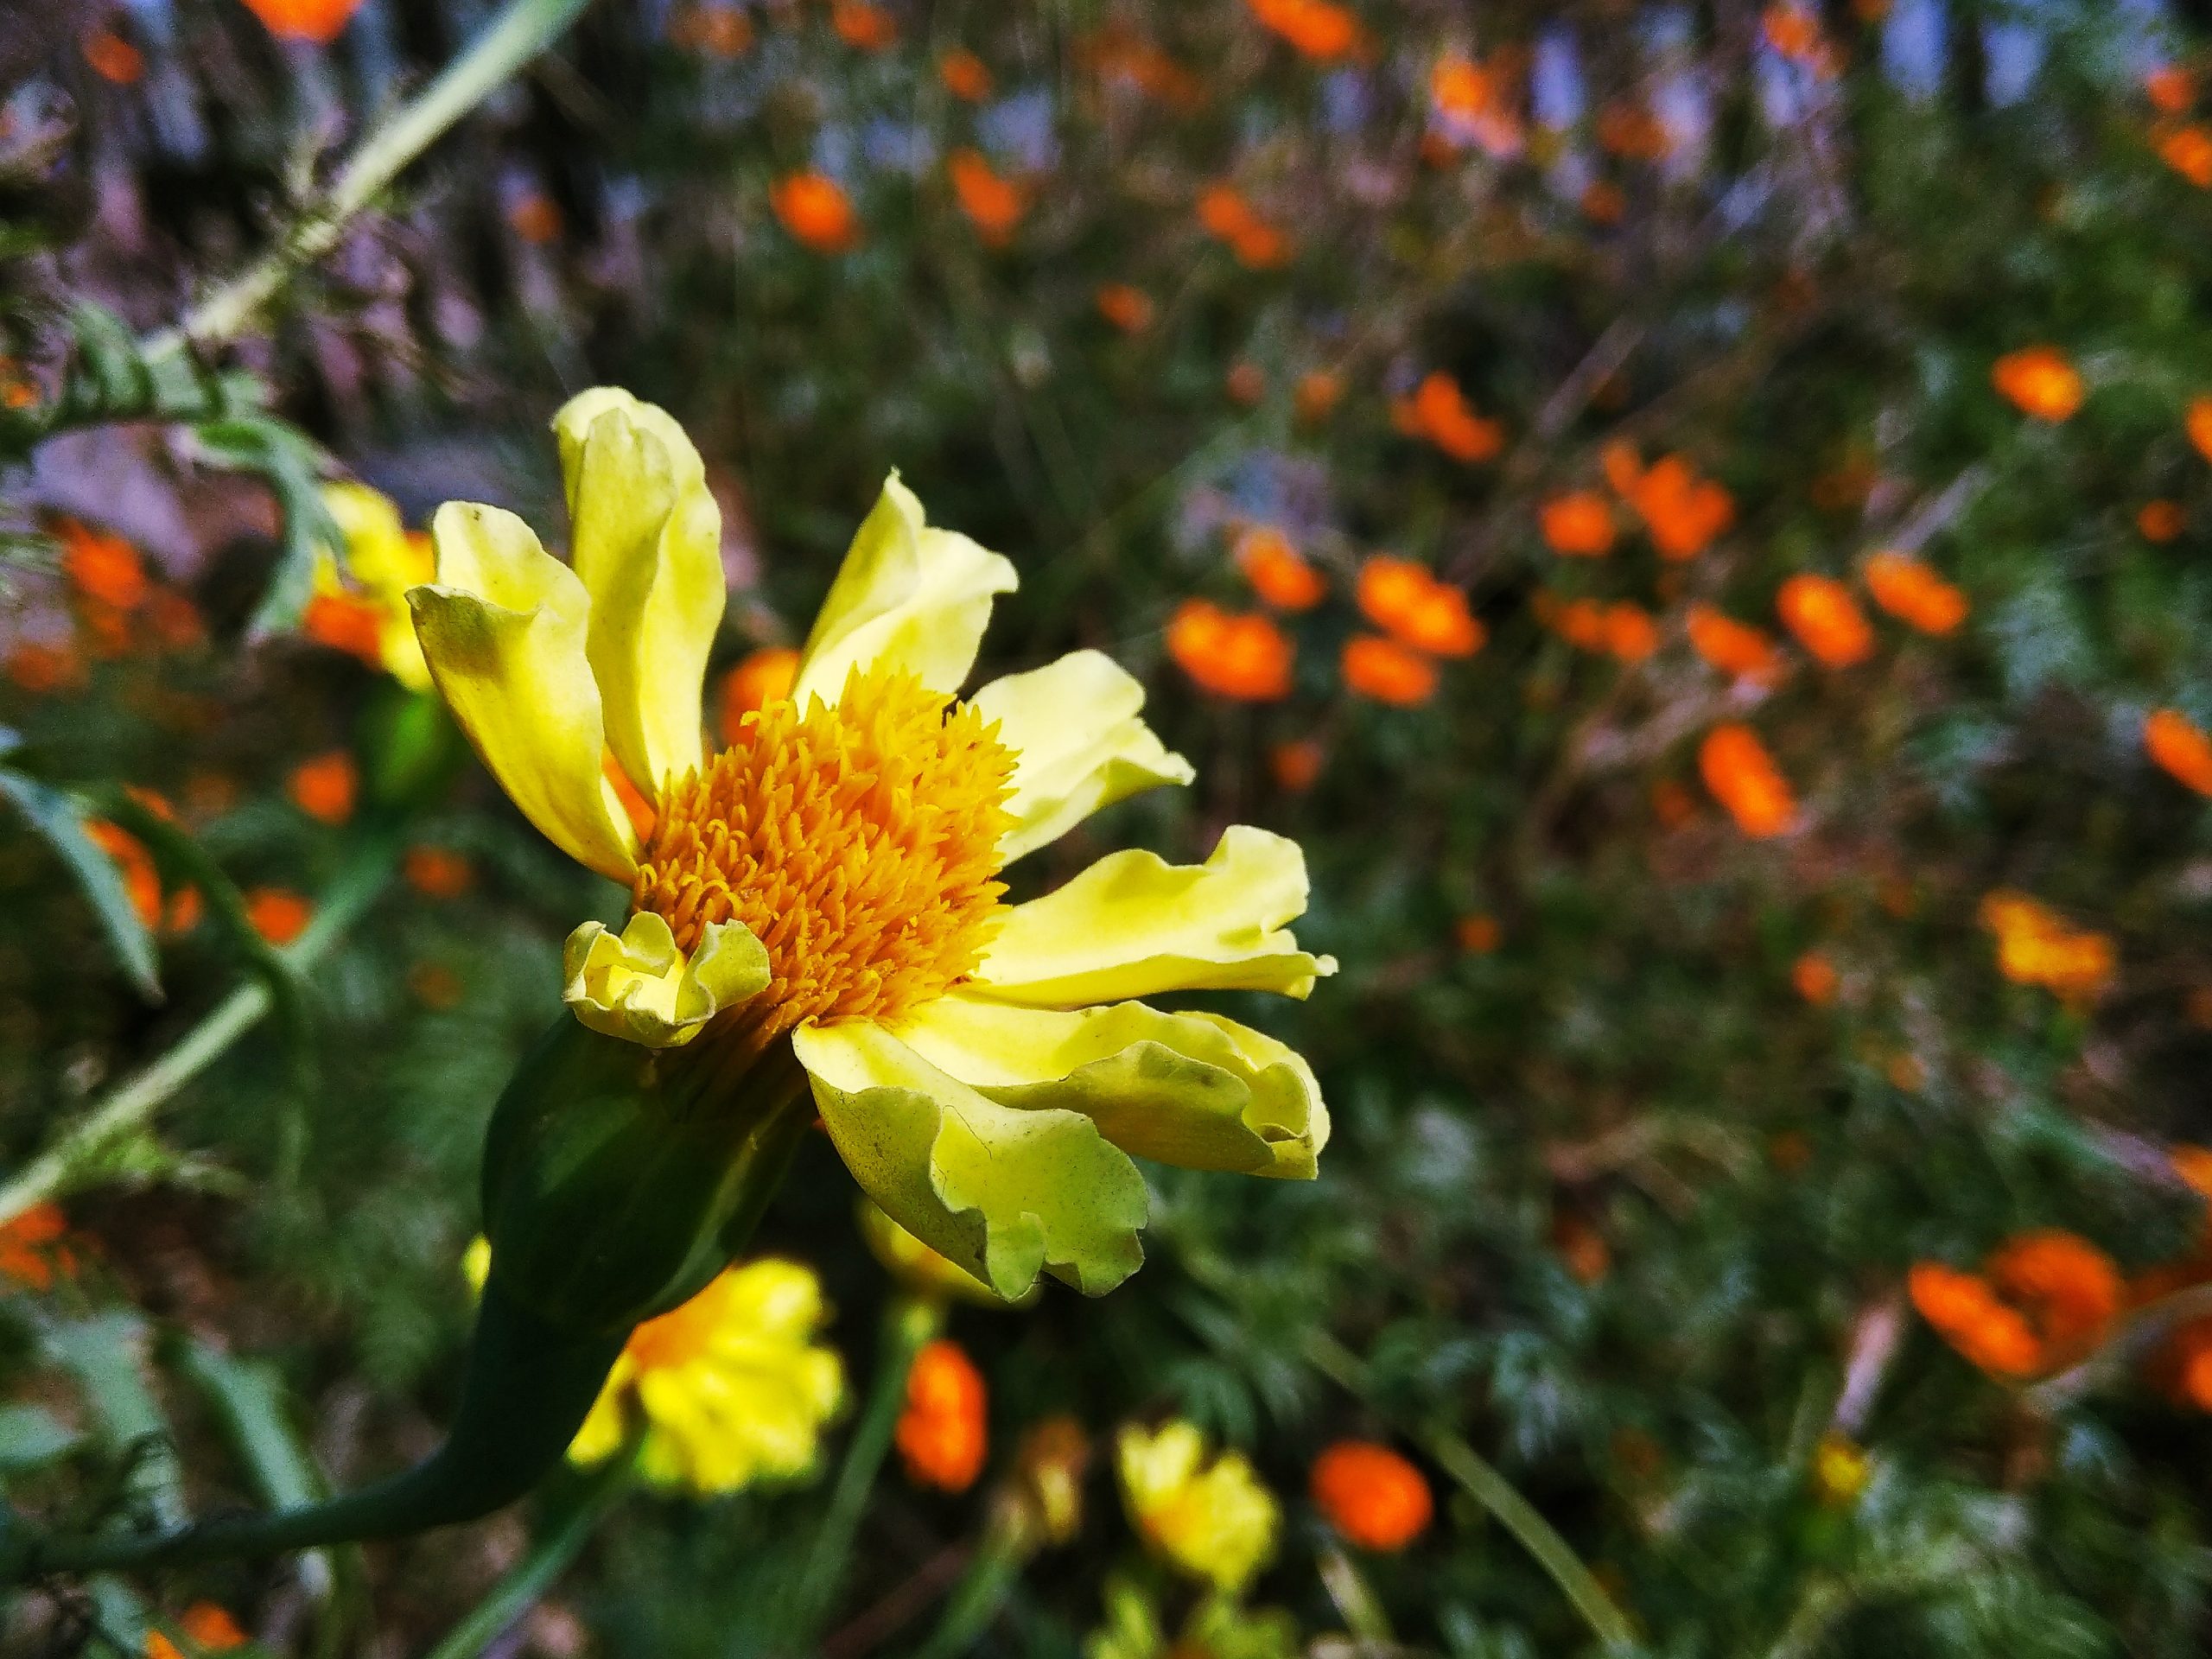 Yellow flowers in a garden